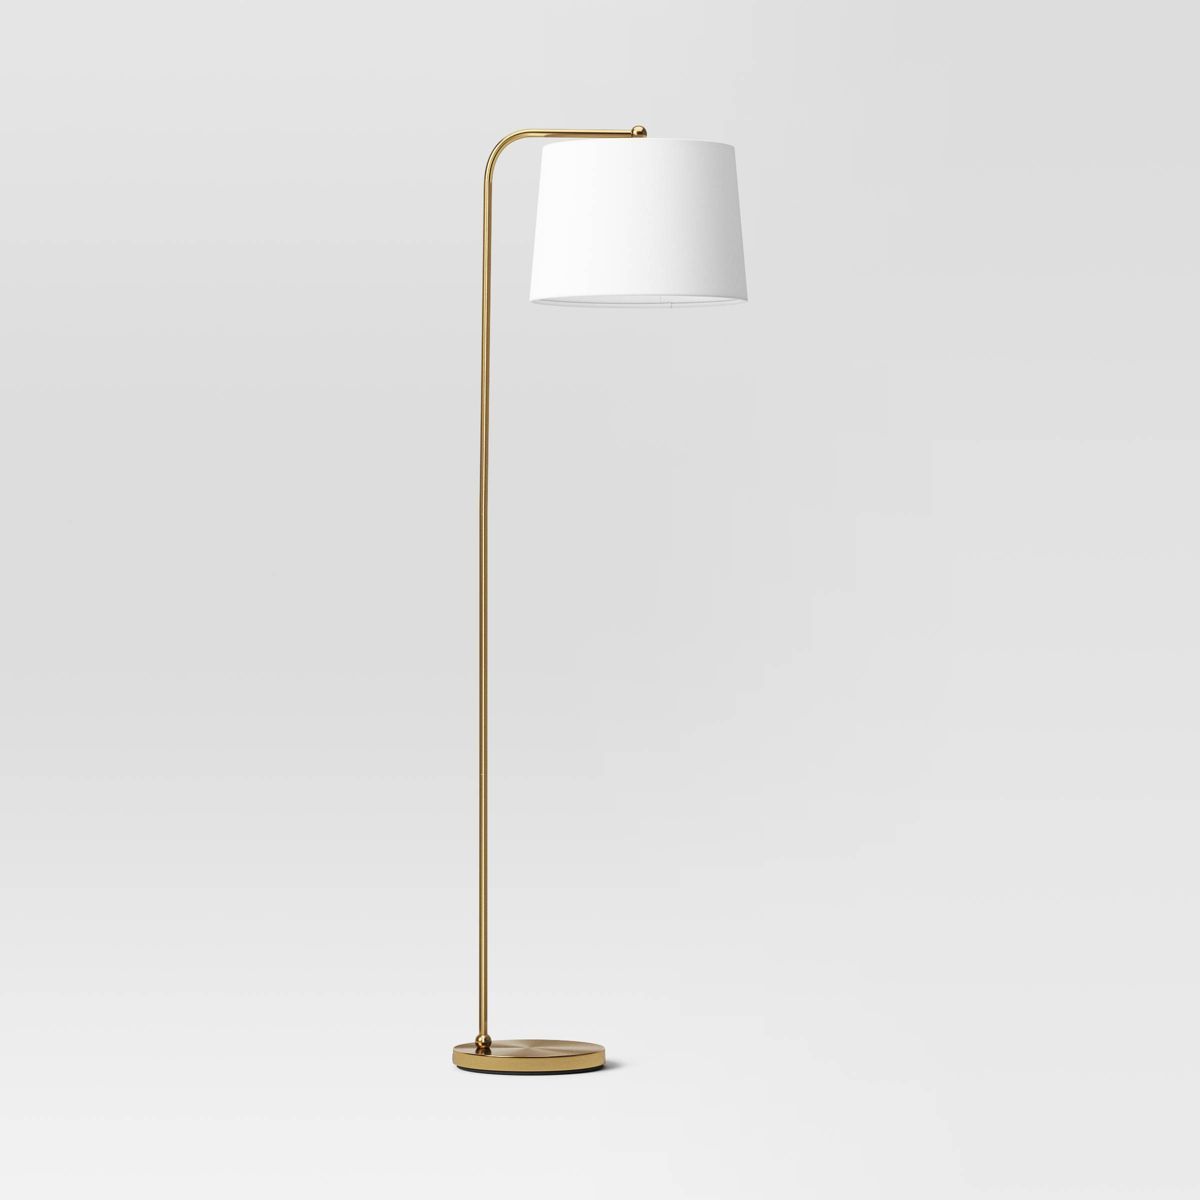 New Traditional Downbridge Floor Lamp Brass - Threshold™ | Target